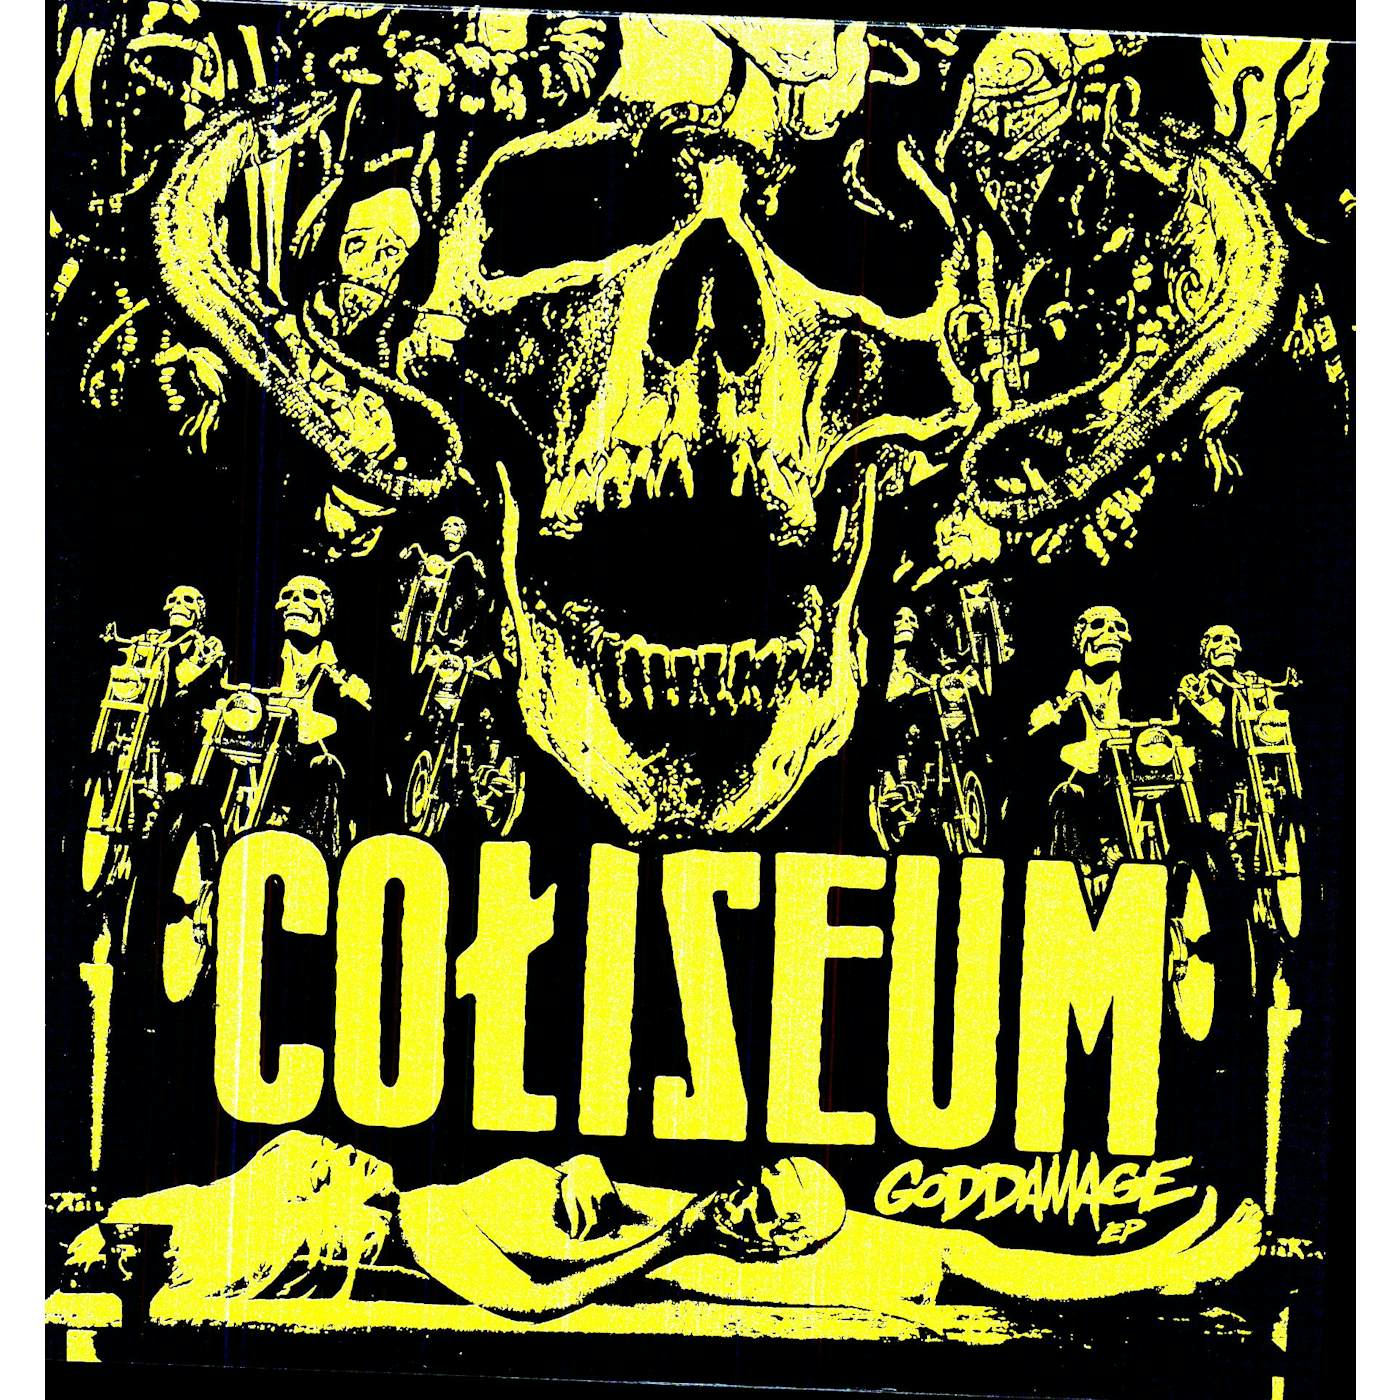 Coliseum Goddamage Vinyl Record